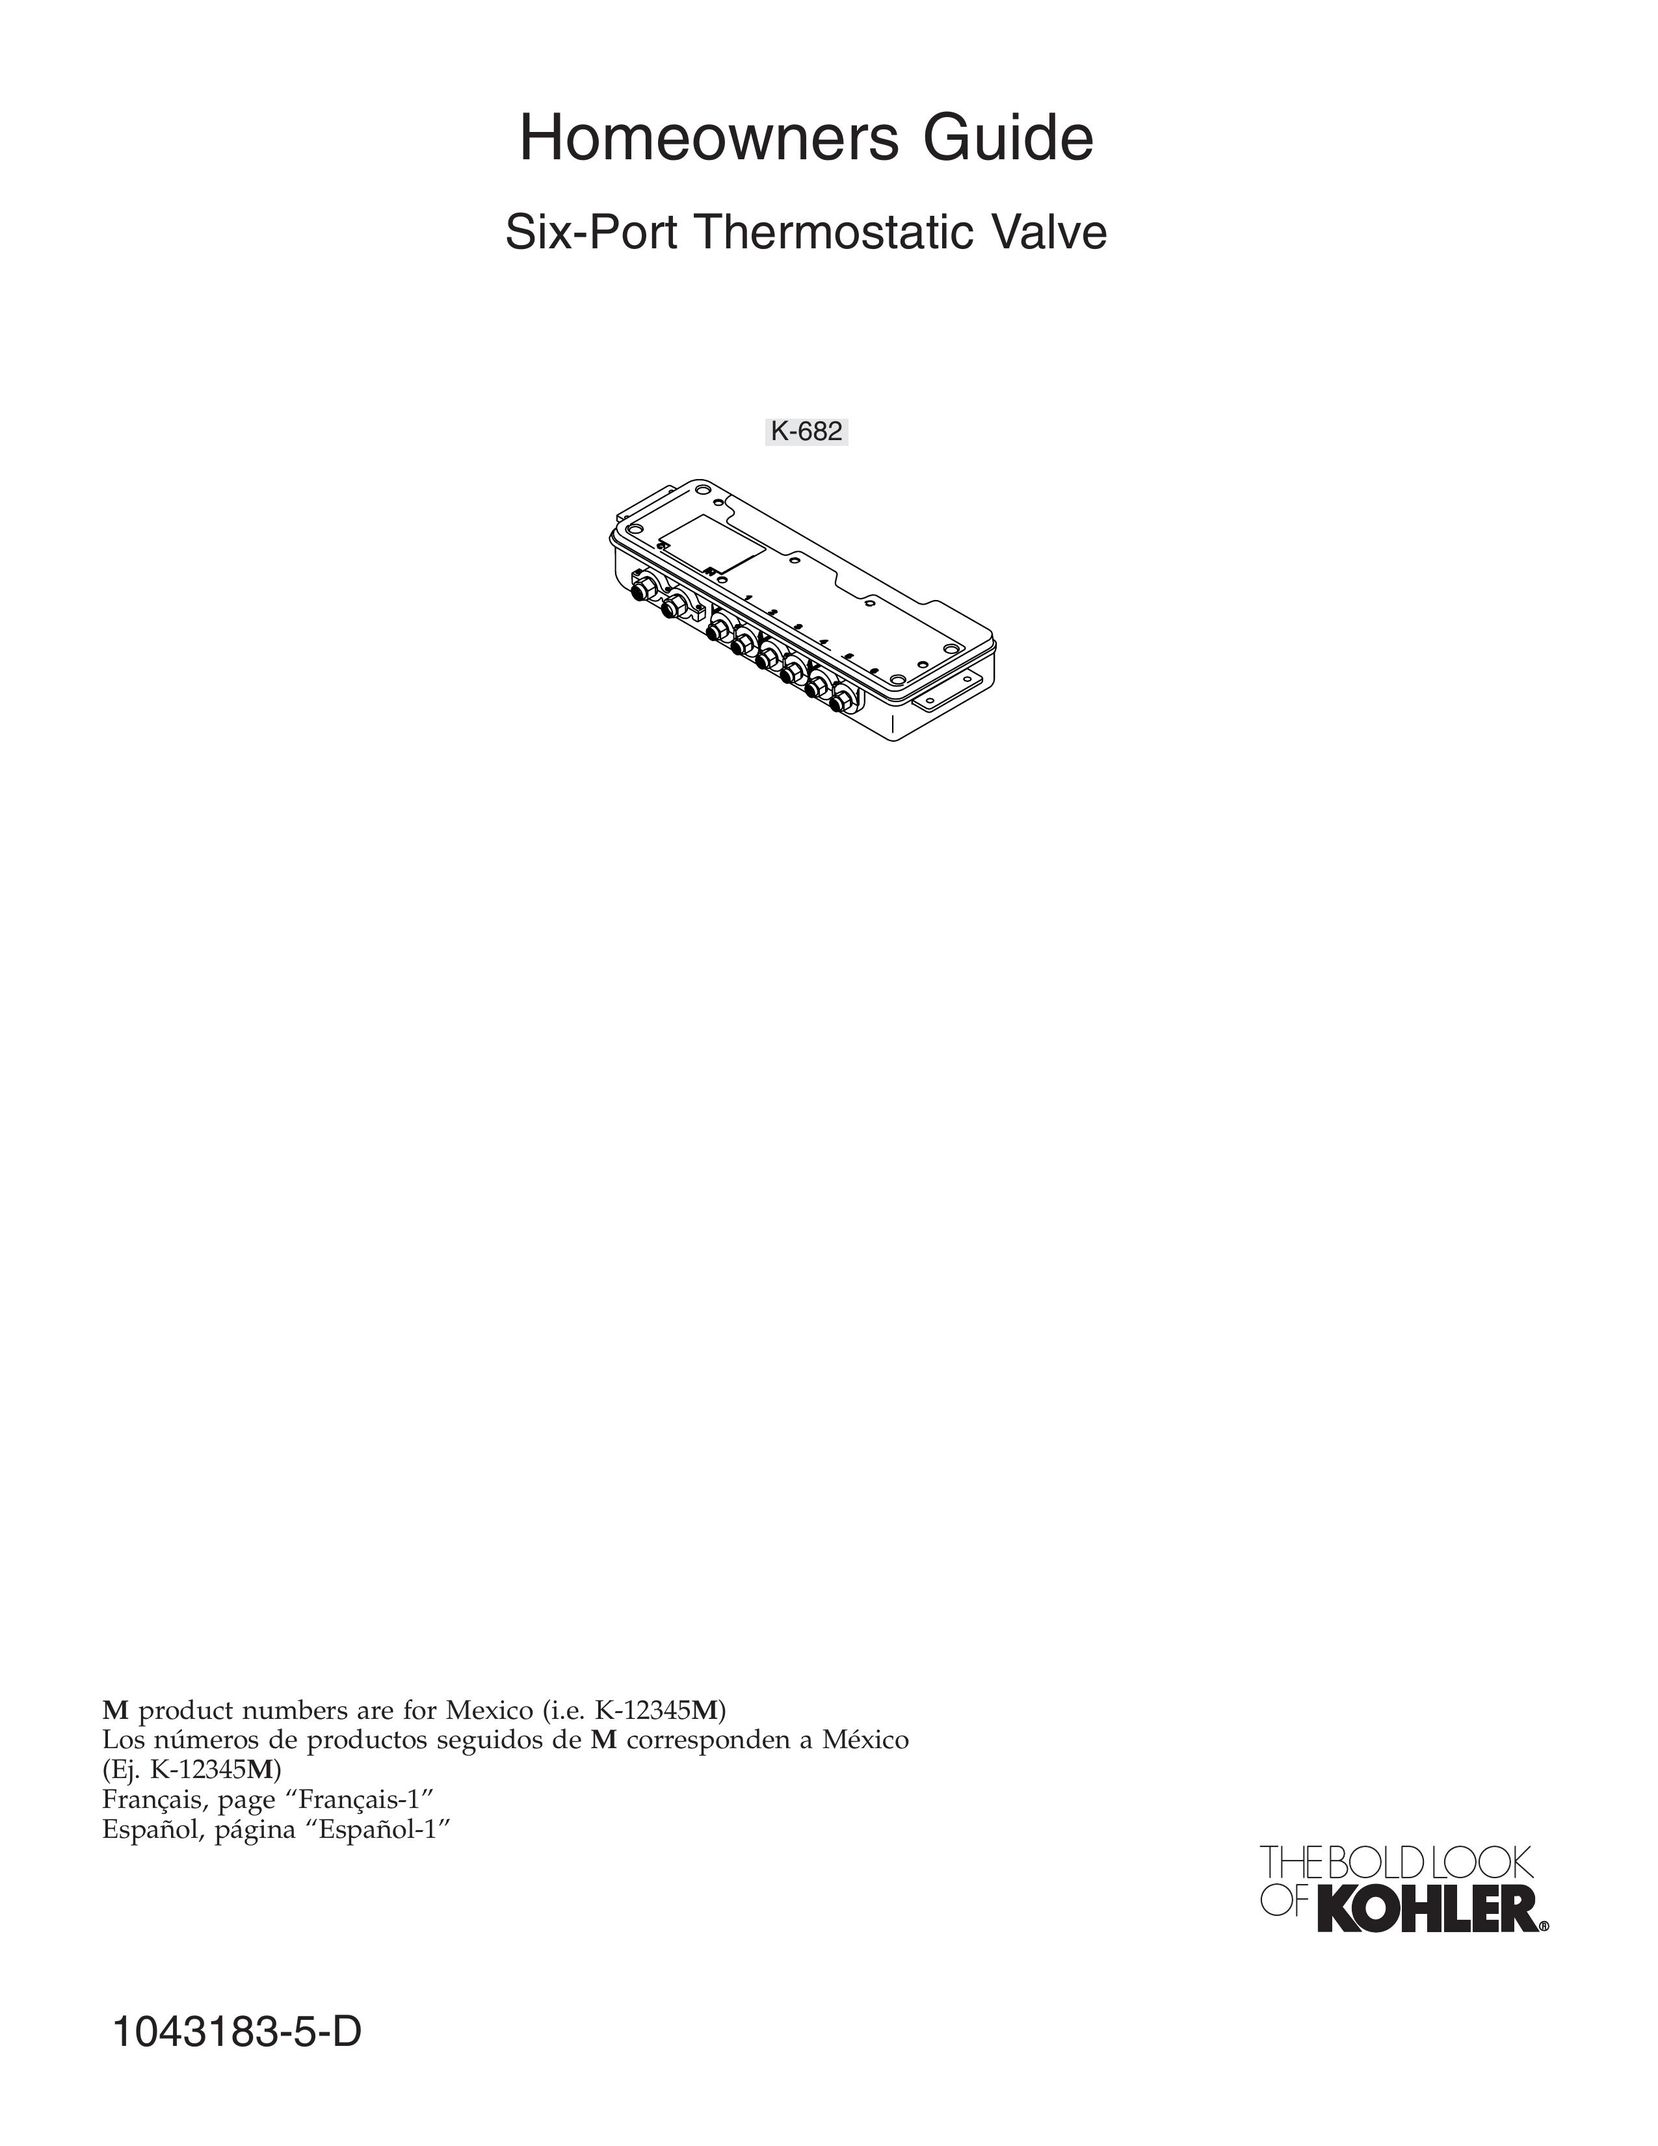 Kohler 1043183-5-D Plumbing Product User Manual